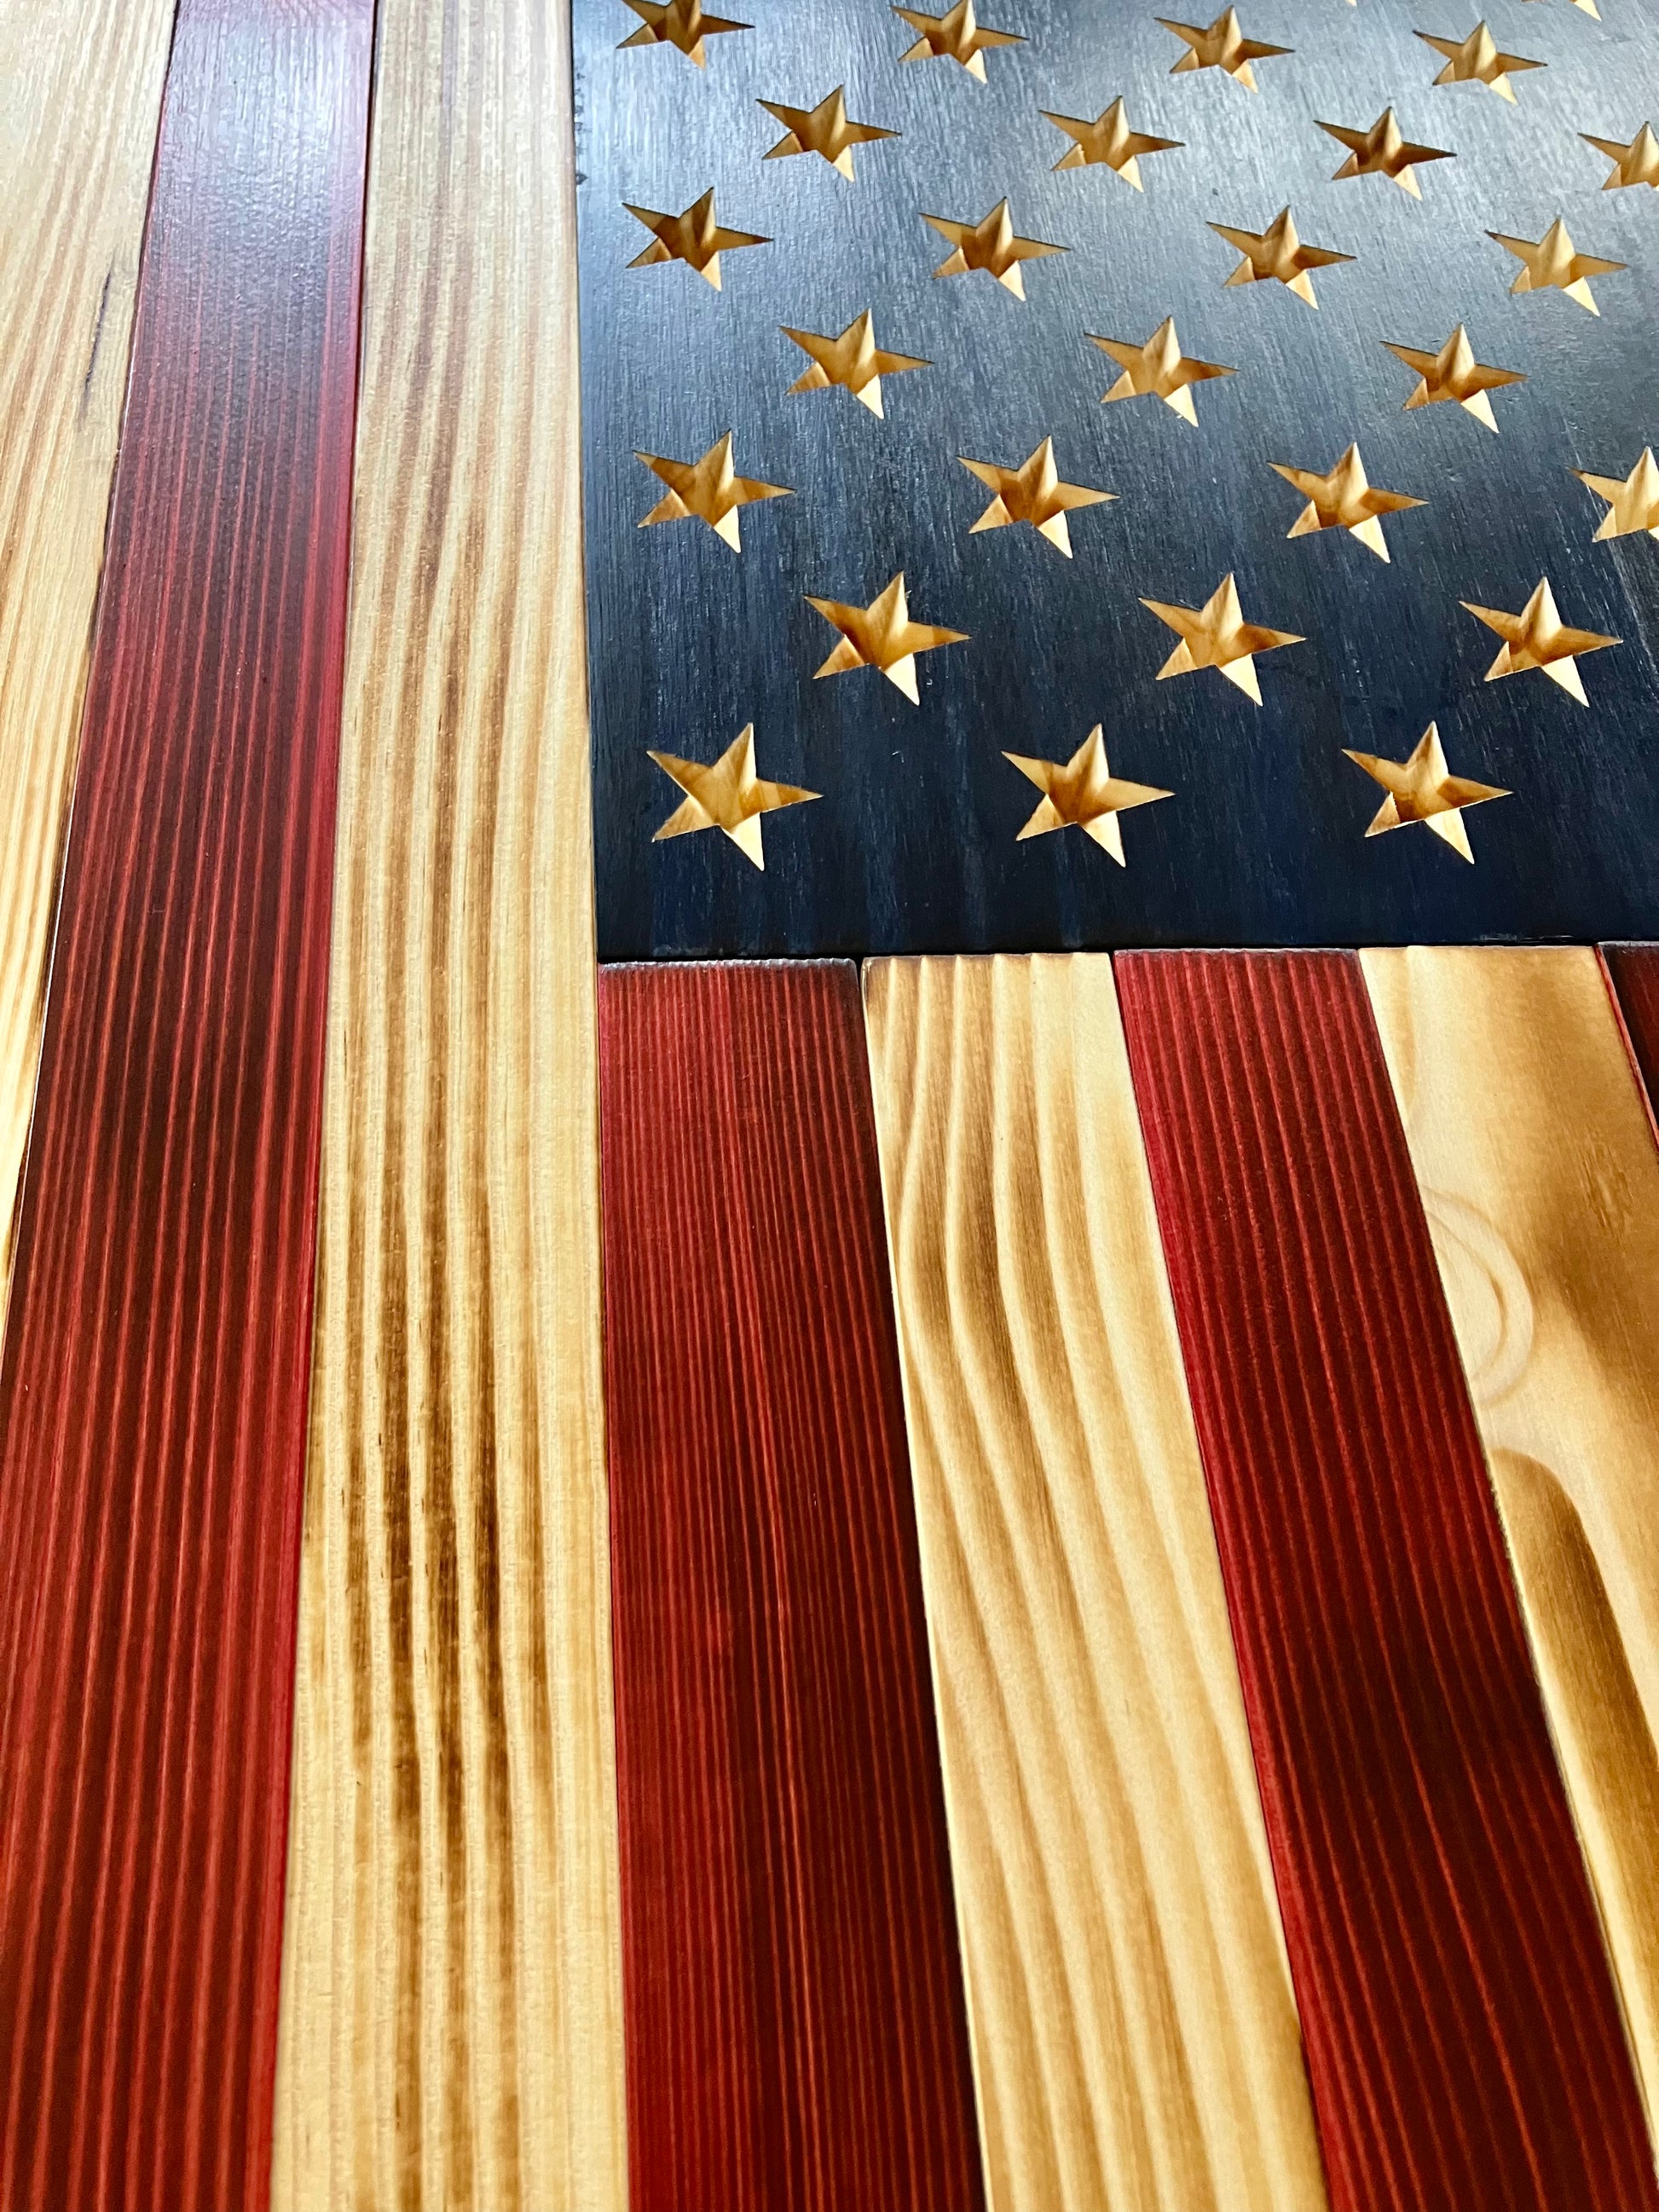 Handmade Wooden American Flag